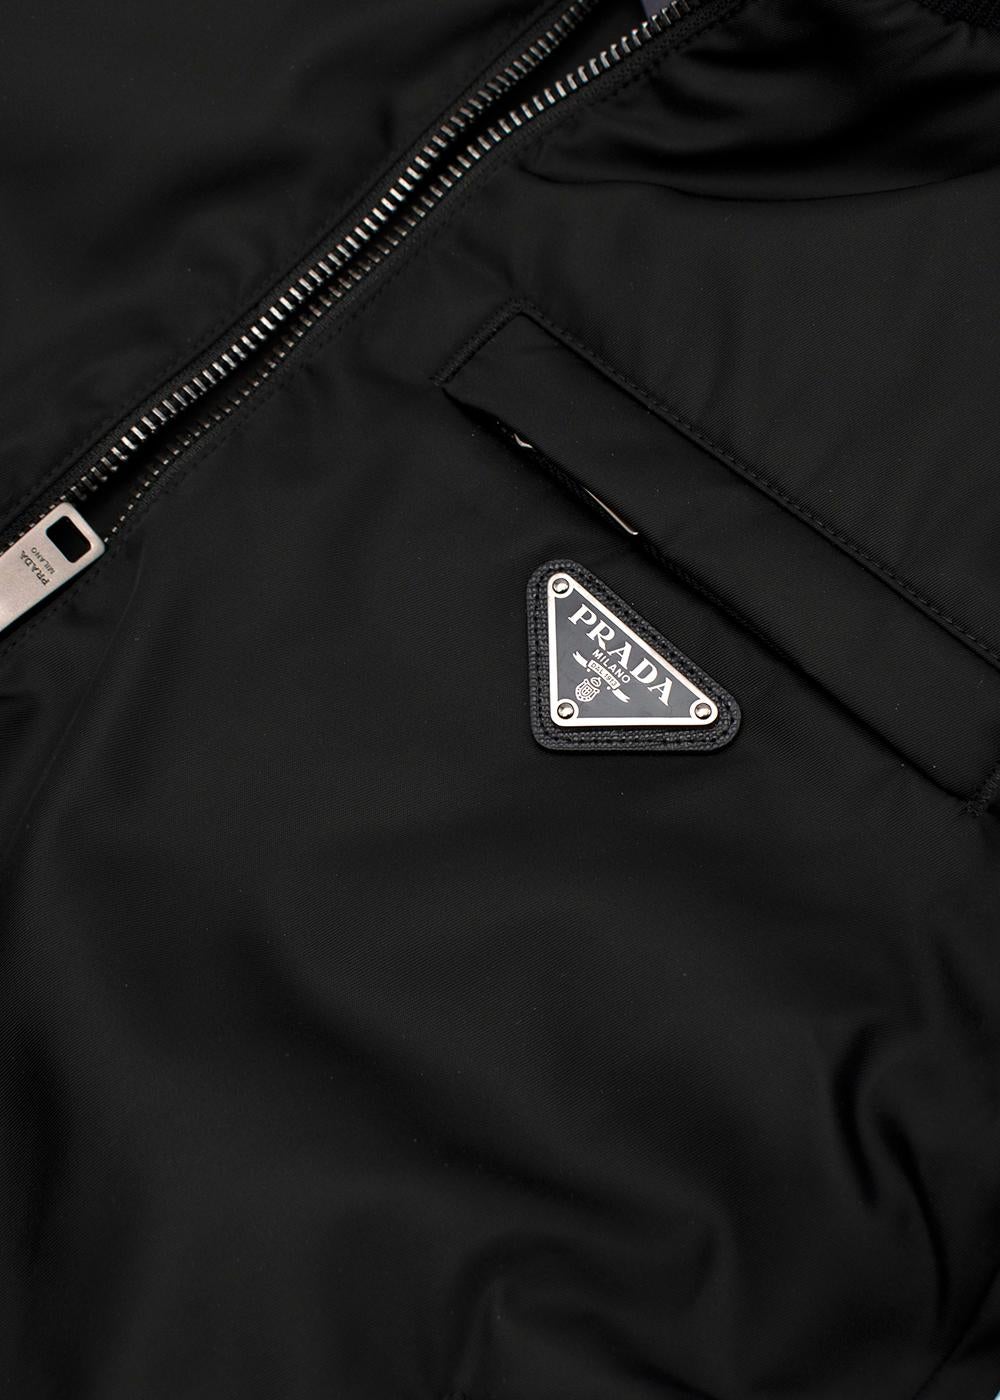 Prada x Adidas Re-Nylon Track Jacket & Joggers For Sale 1